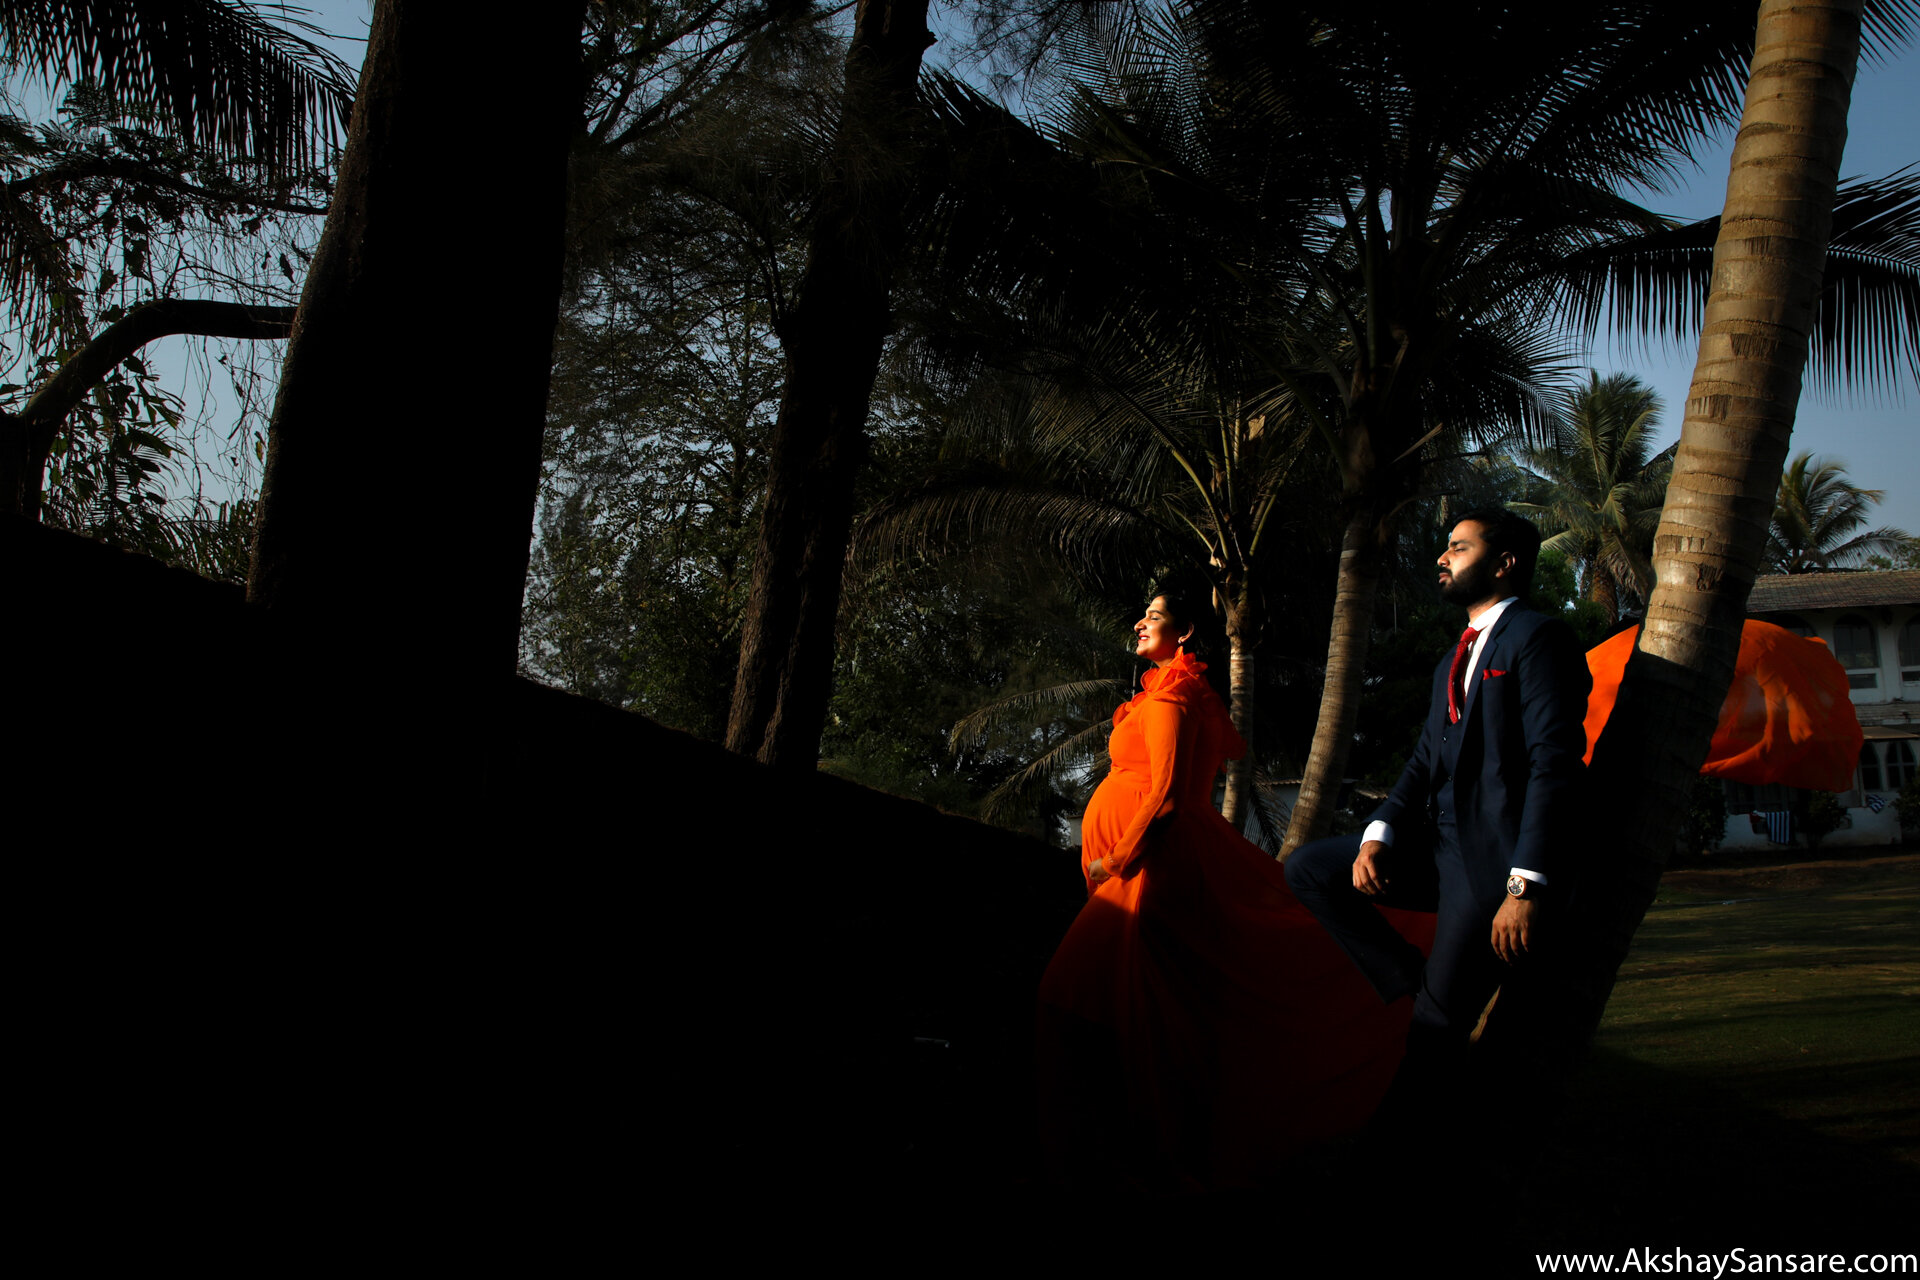 Anuj x Malvika + 1 Akshay Sansare Photography & Films Candid Photographer Best in mumbai Cinematic wedding films-20.jpg